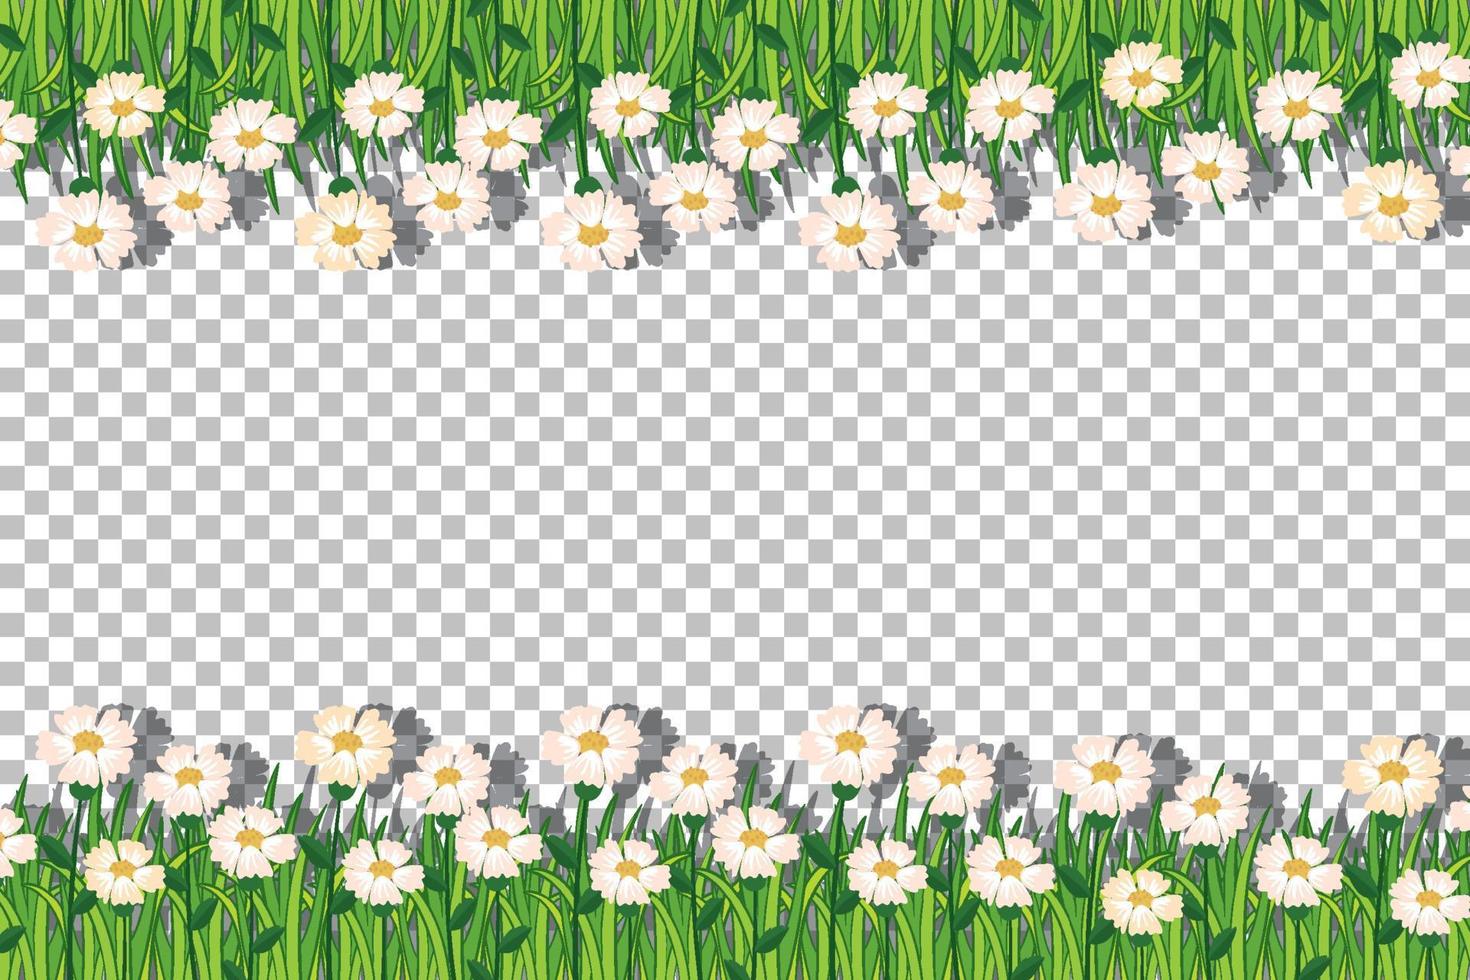 Nature plants frame grid background vector